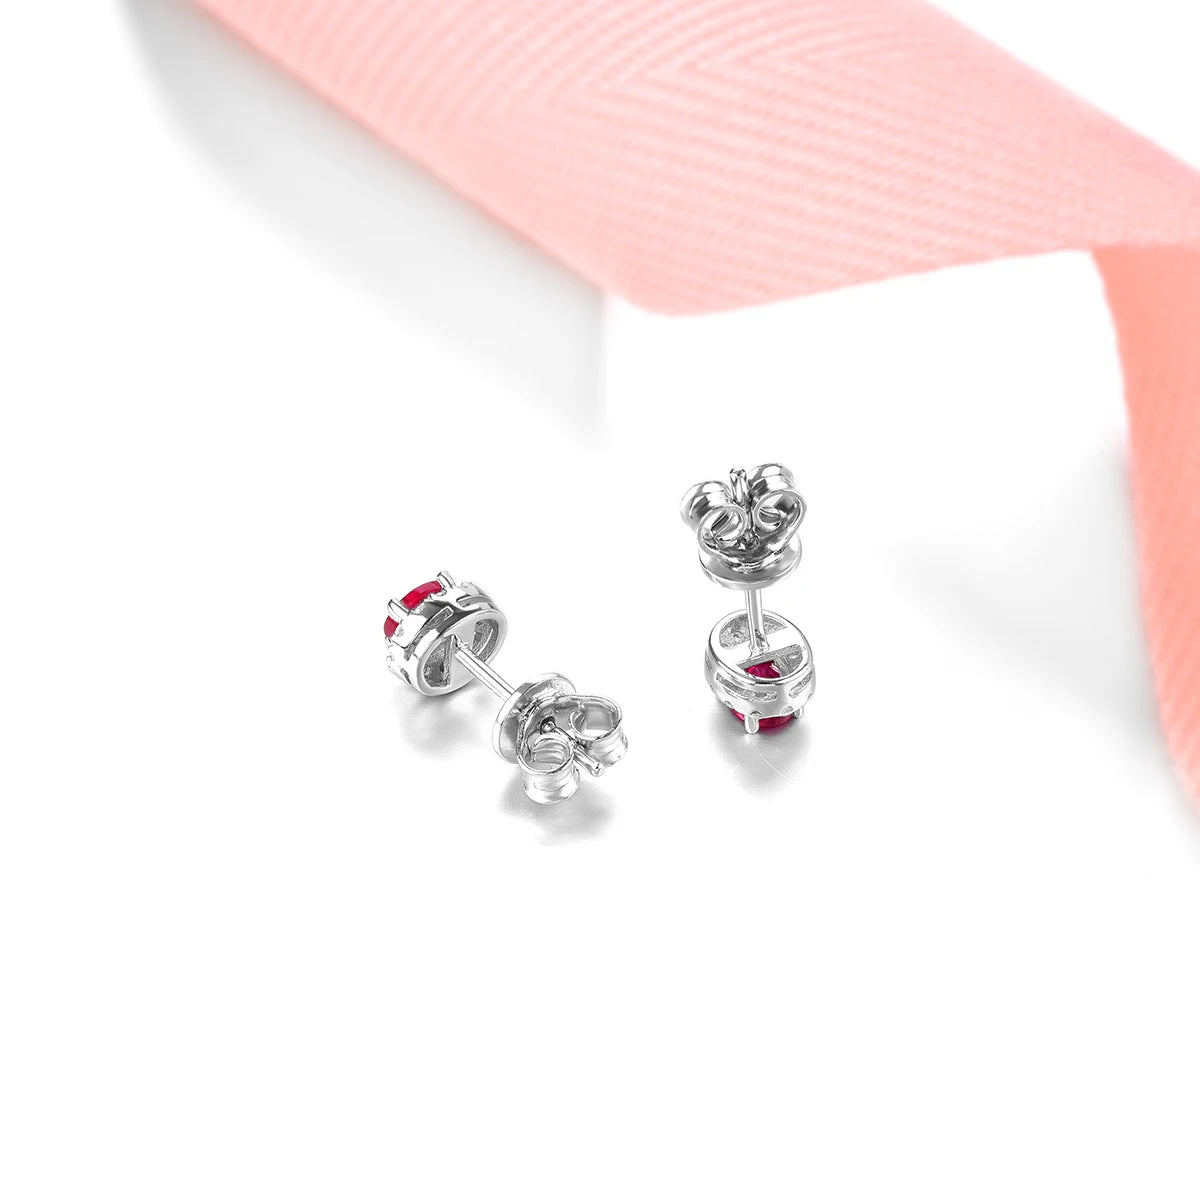 Natural Ruby Gemstone Sterling Silver Stud Earrings 0.5 Carats Genuine Precious Stone Women Romantic Elegant S925 Jewelrys